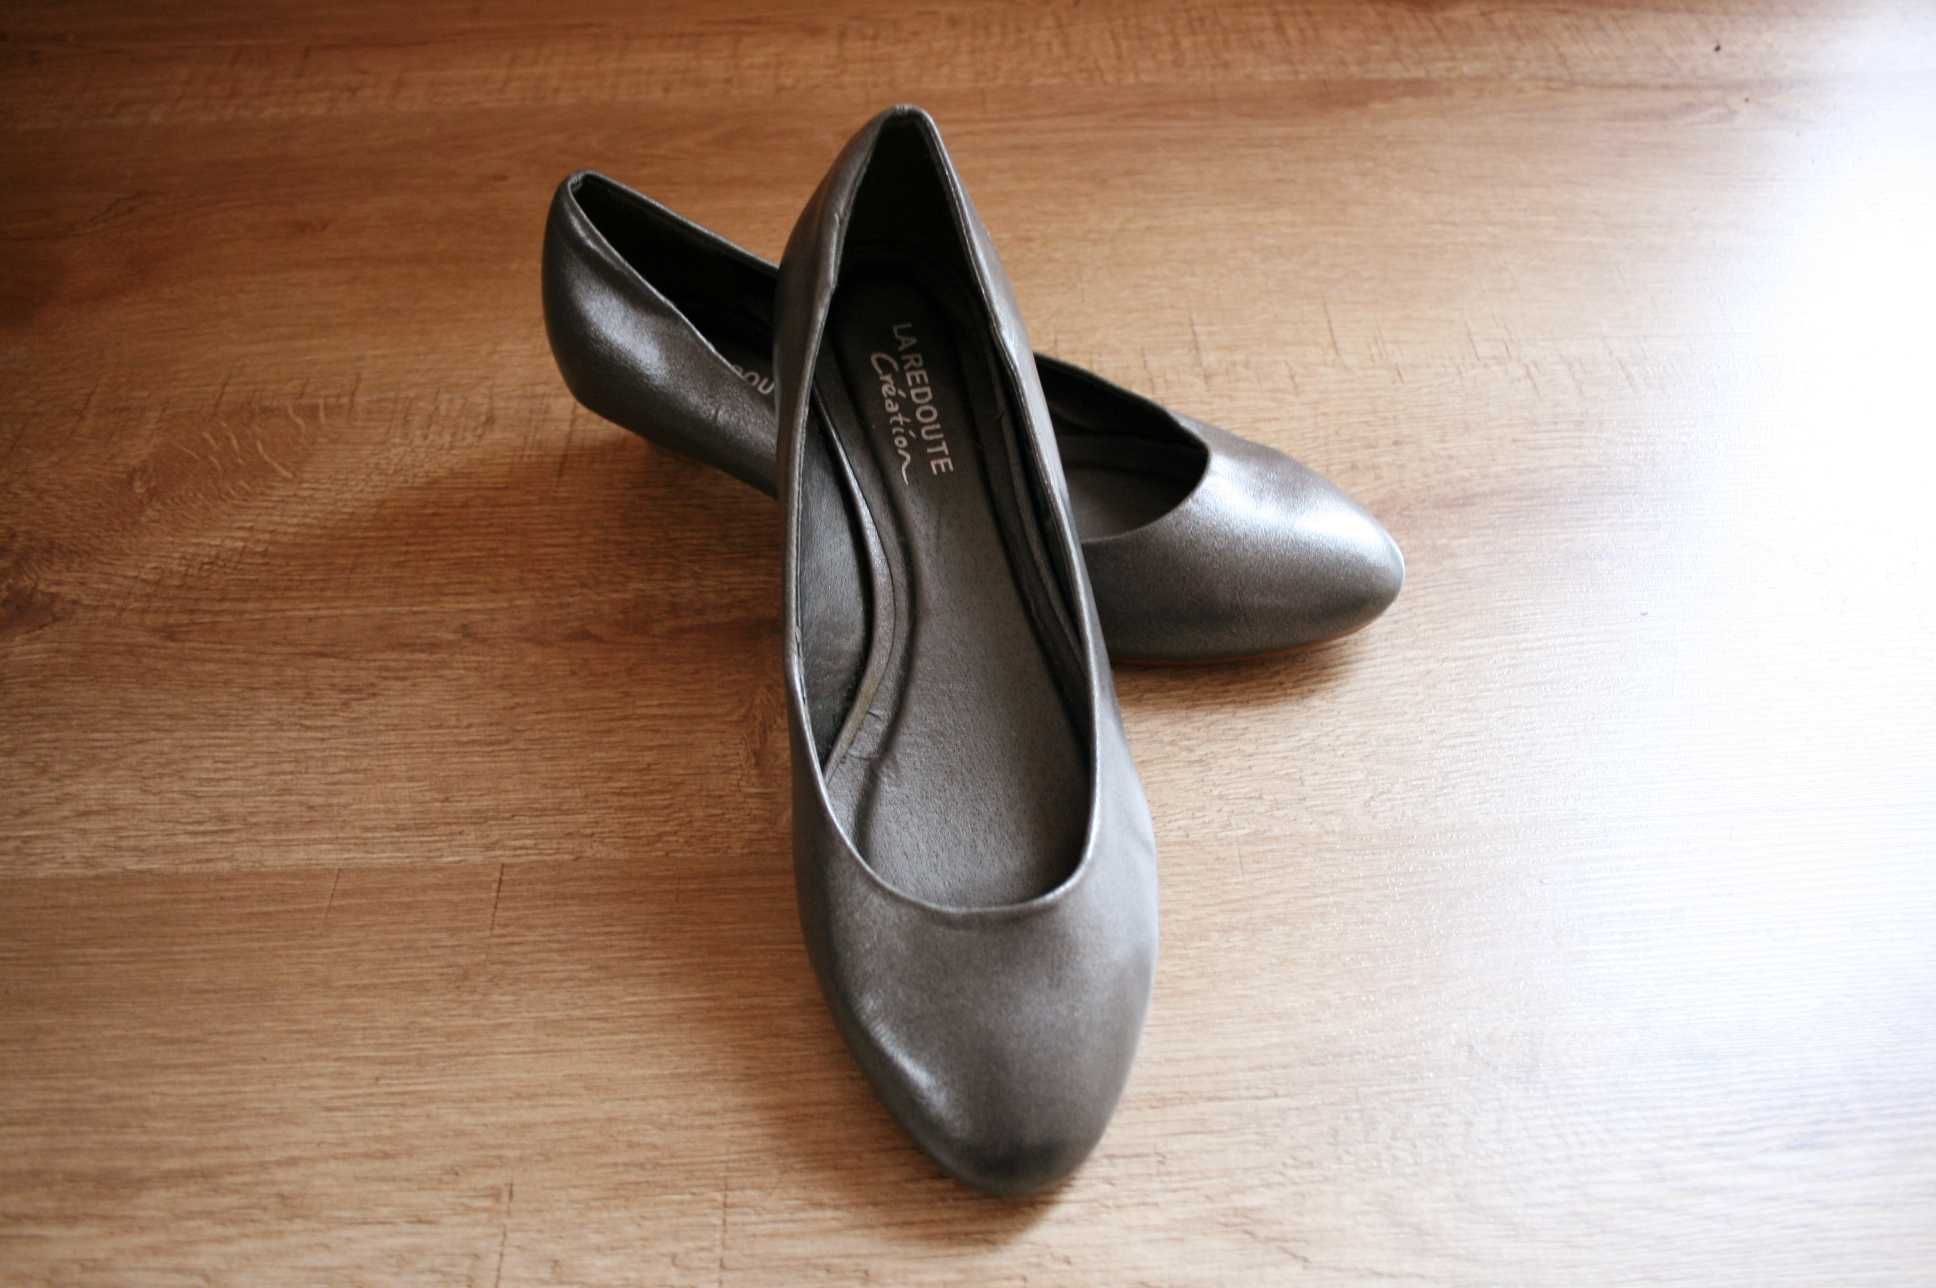 Eleganckie szare buty damskie La Redoute na obcasie 3,5cm rozmiar 39